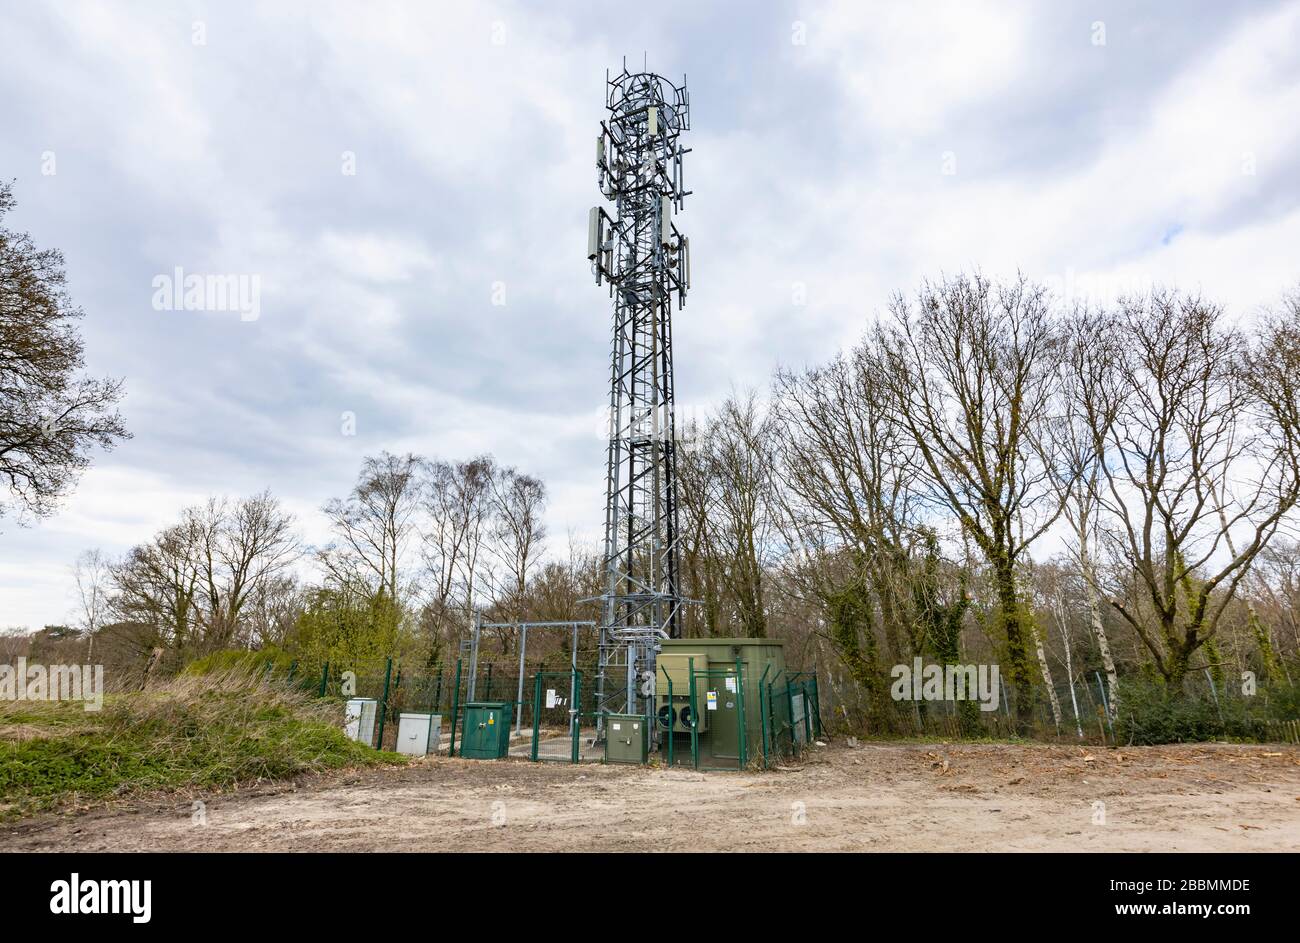 Tall steel lattice telecommunications tower forming part of the mobile telecommunications transmission network, Woking, Surrey, south-east England Stock Photo